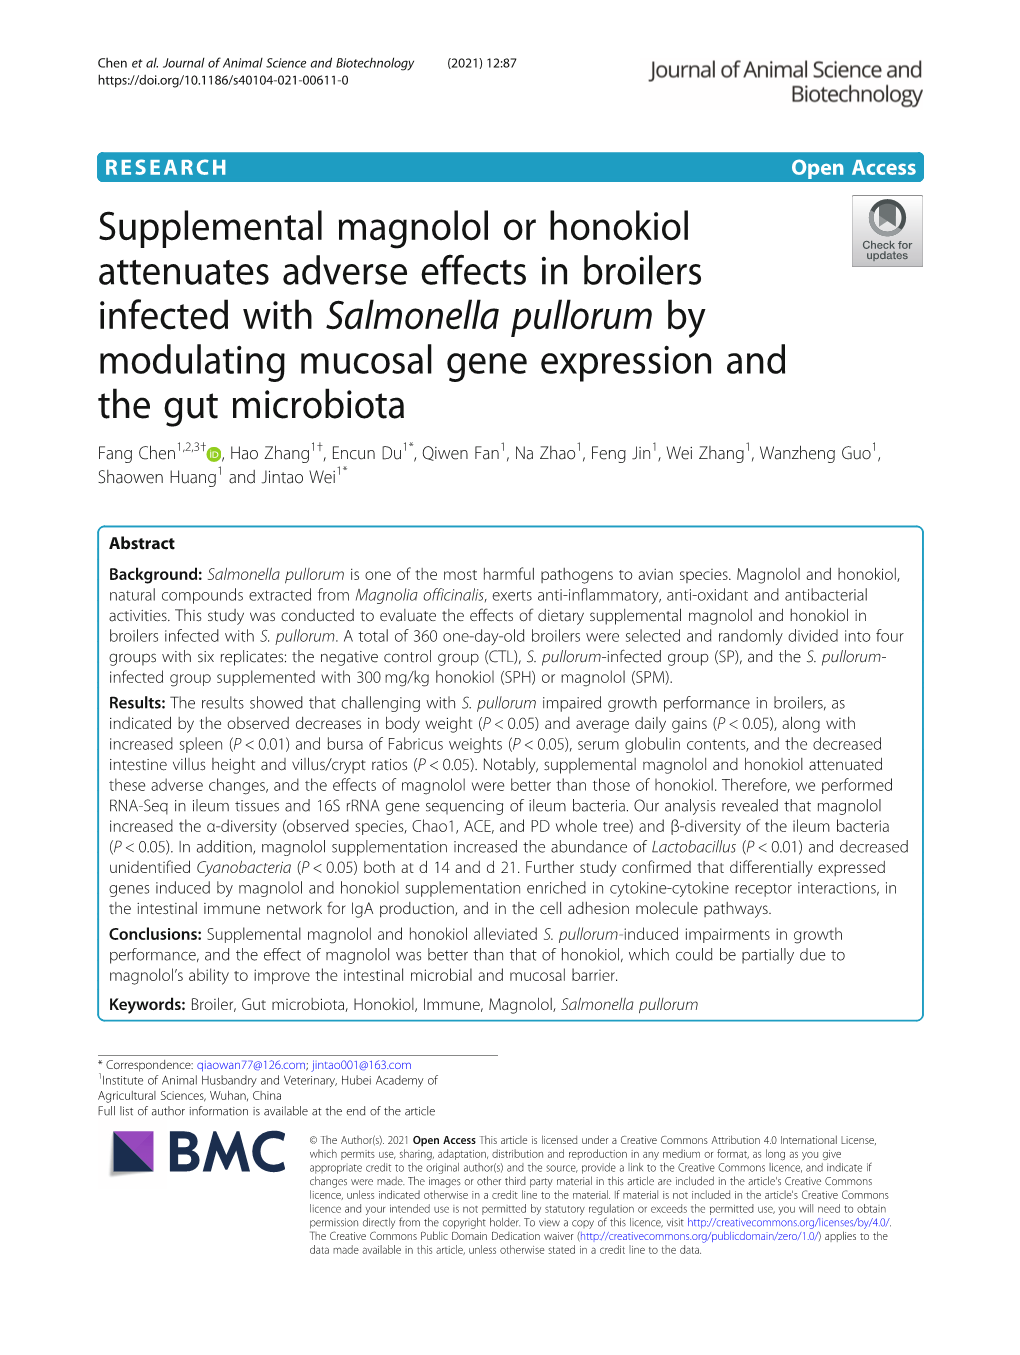 Supplemental Magnolol Or Honokiol Attenuates Adverse Effects In